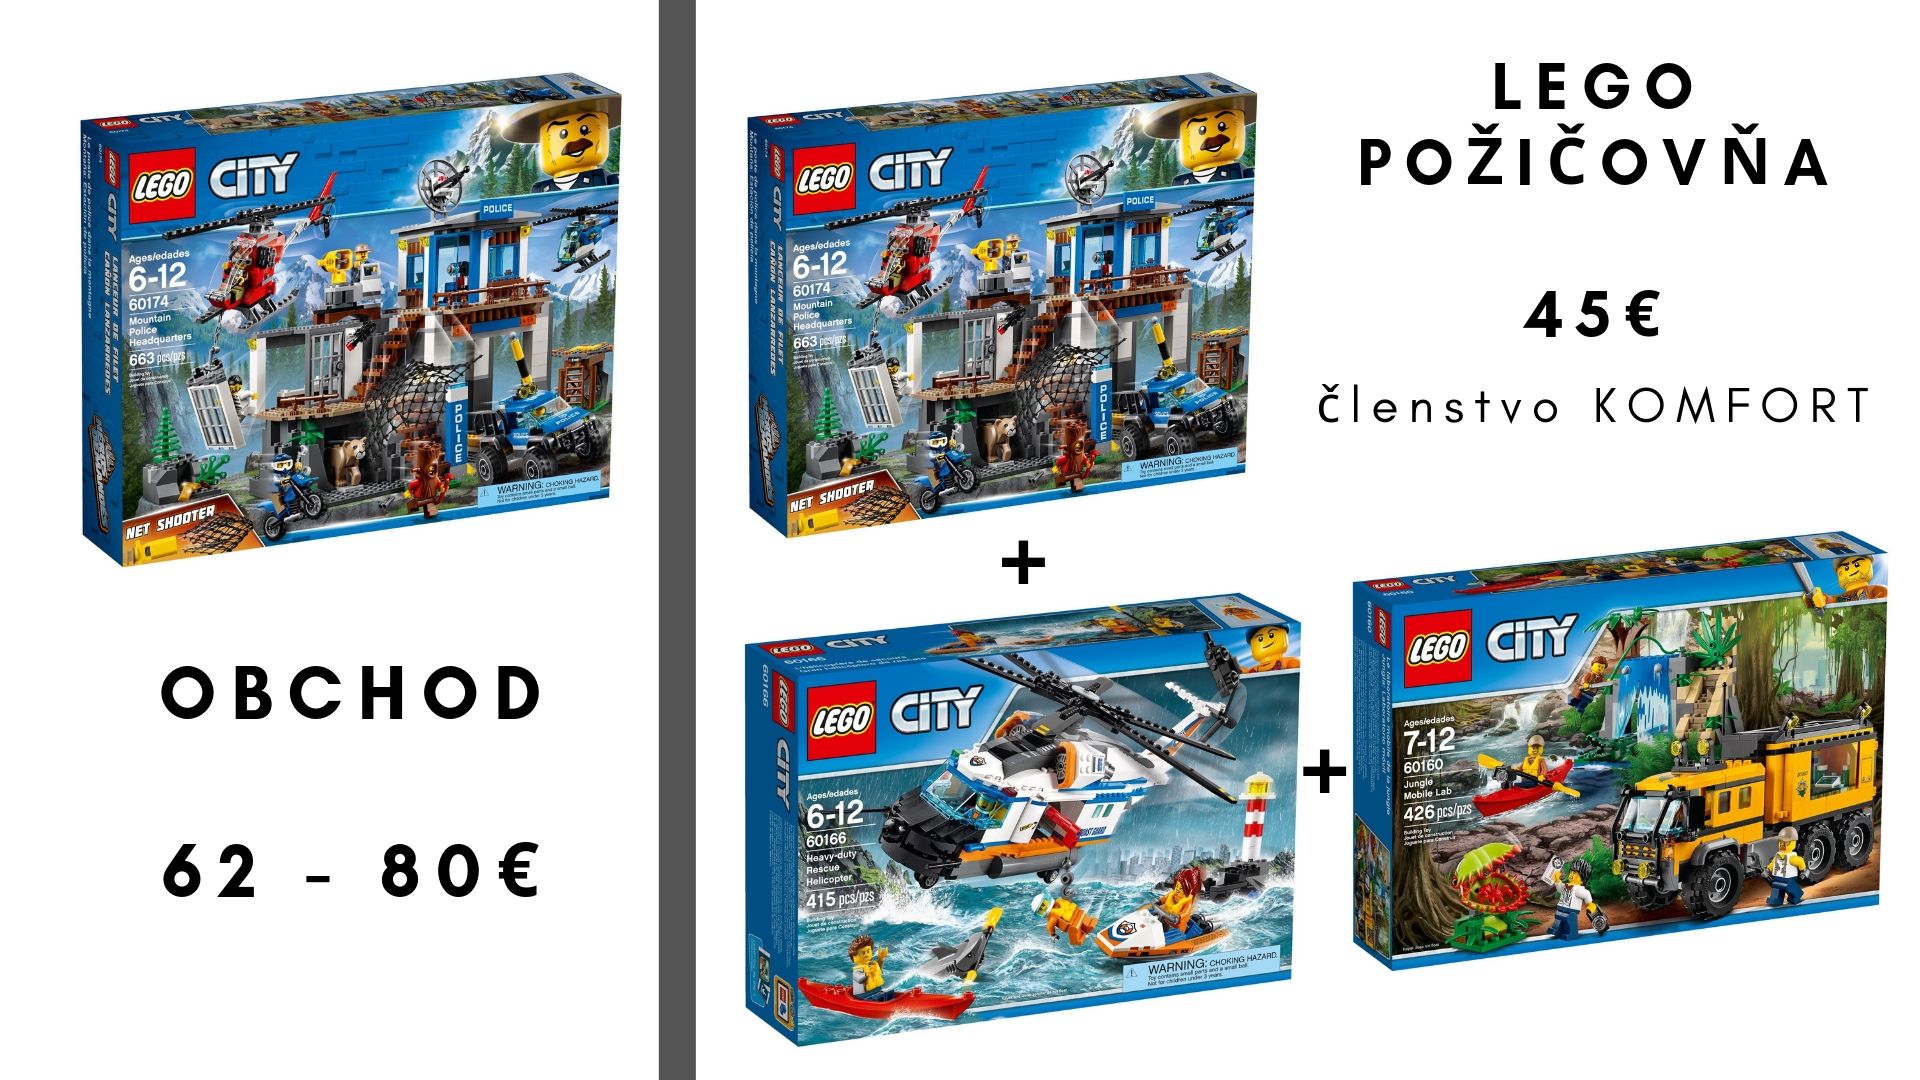 Darček na narodeniny - vyhody LEGO pozicovne